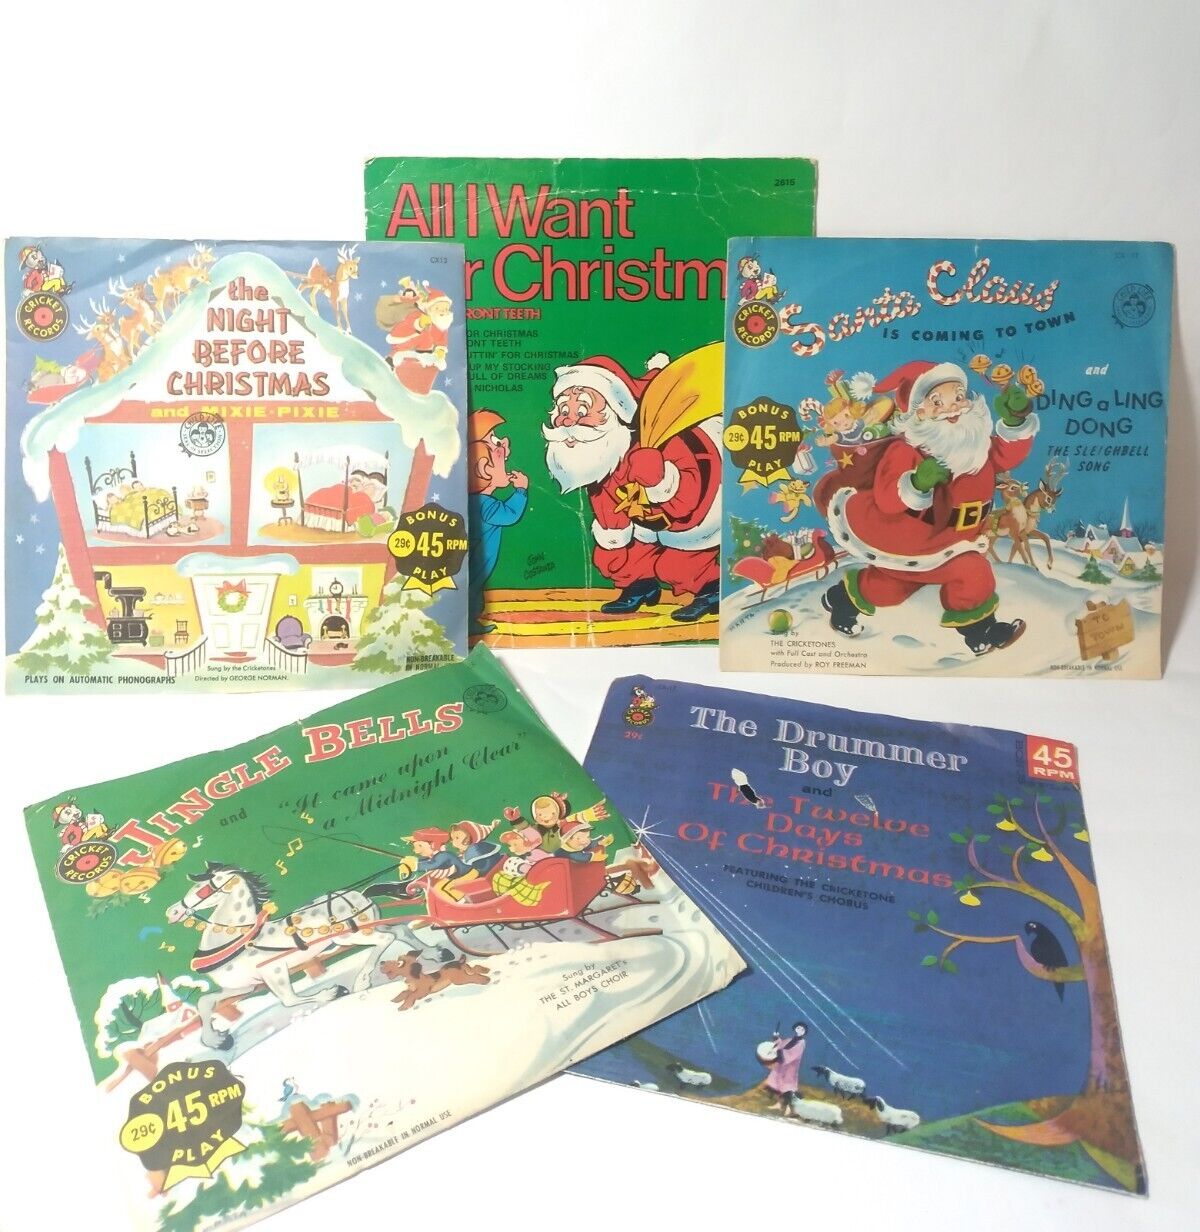 5 Vtg. Christmas 45 Records All I Want, Mixie Pixie Jingle Bells, Santa Claus...